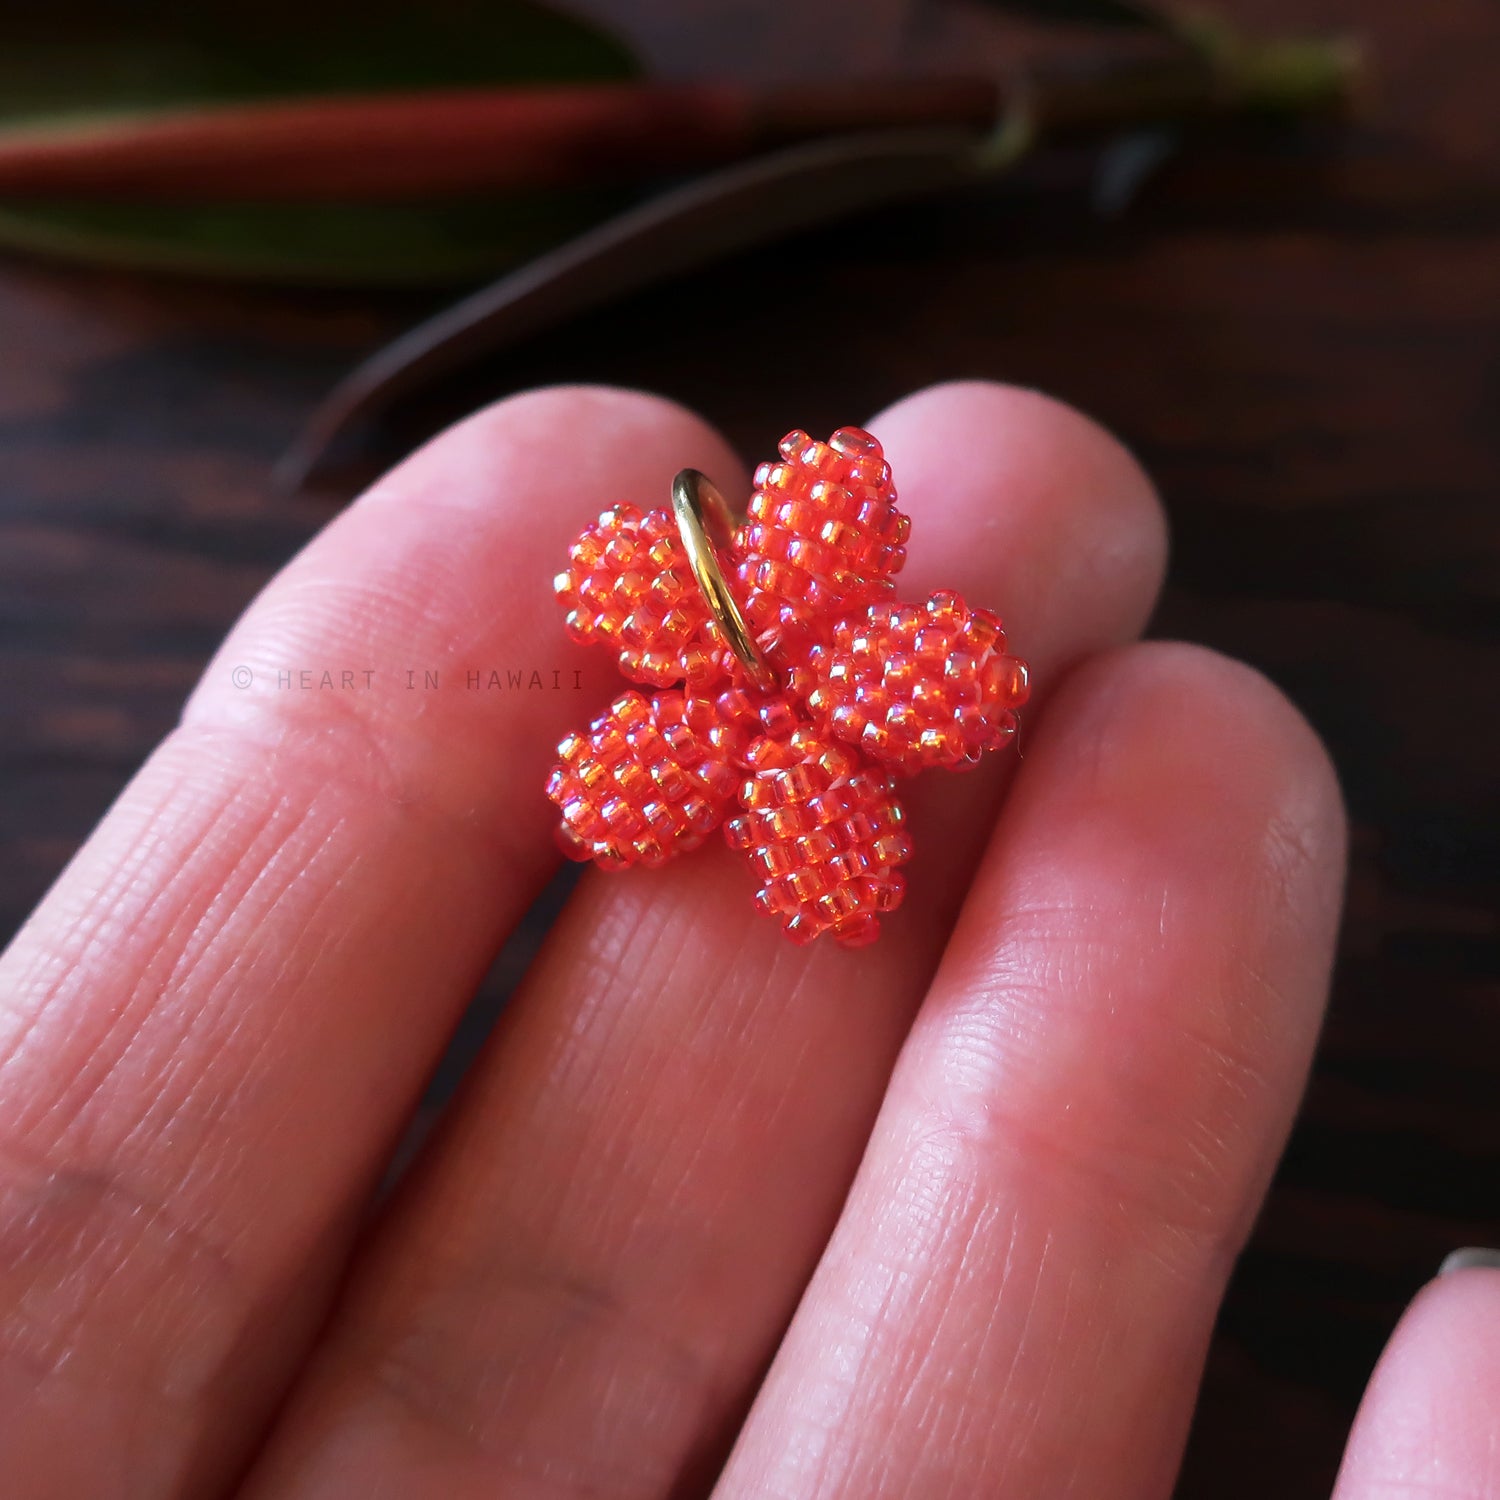 Heart in Hawaii Tiny Plumeria Flower Clip Charm - Lava Orange